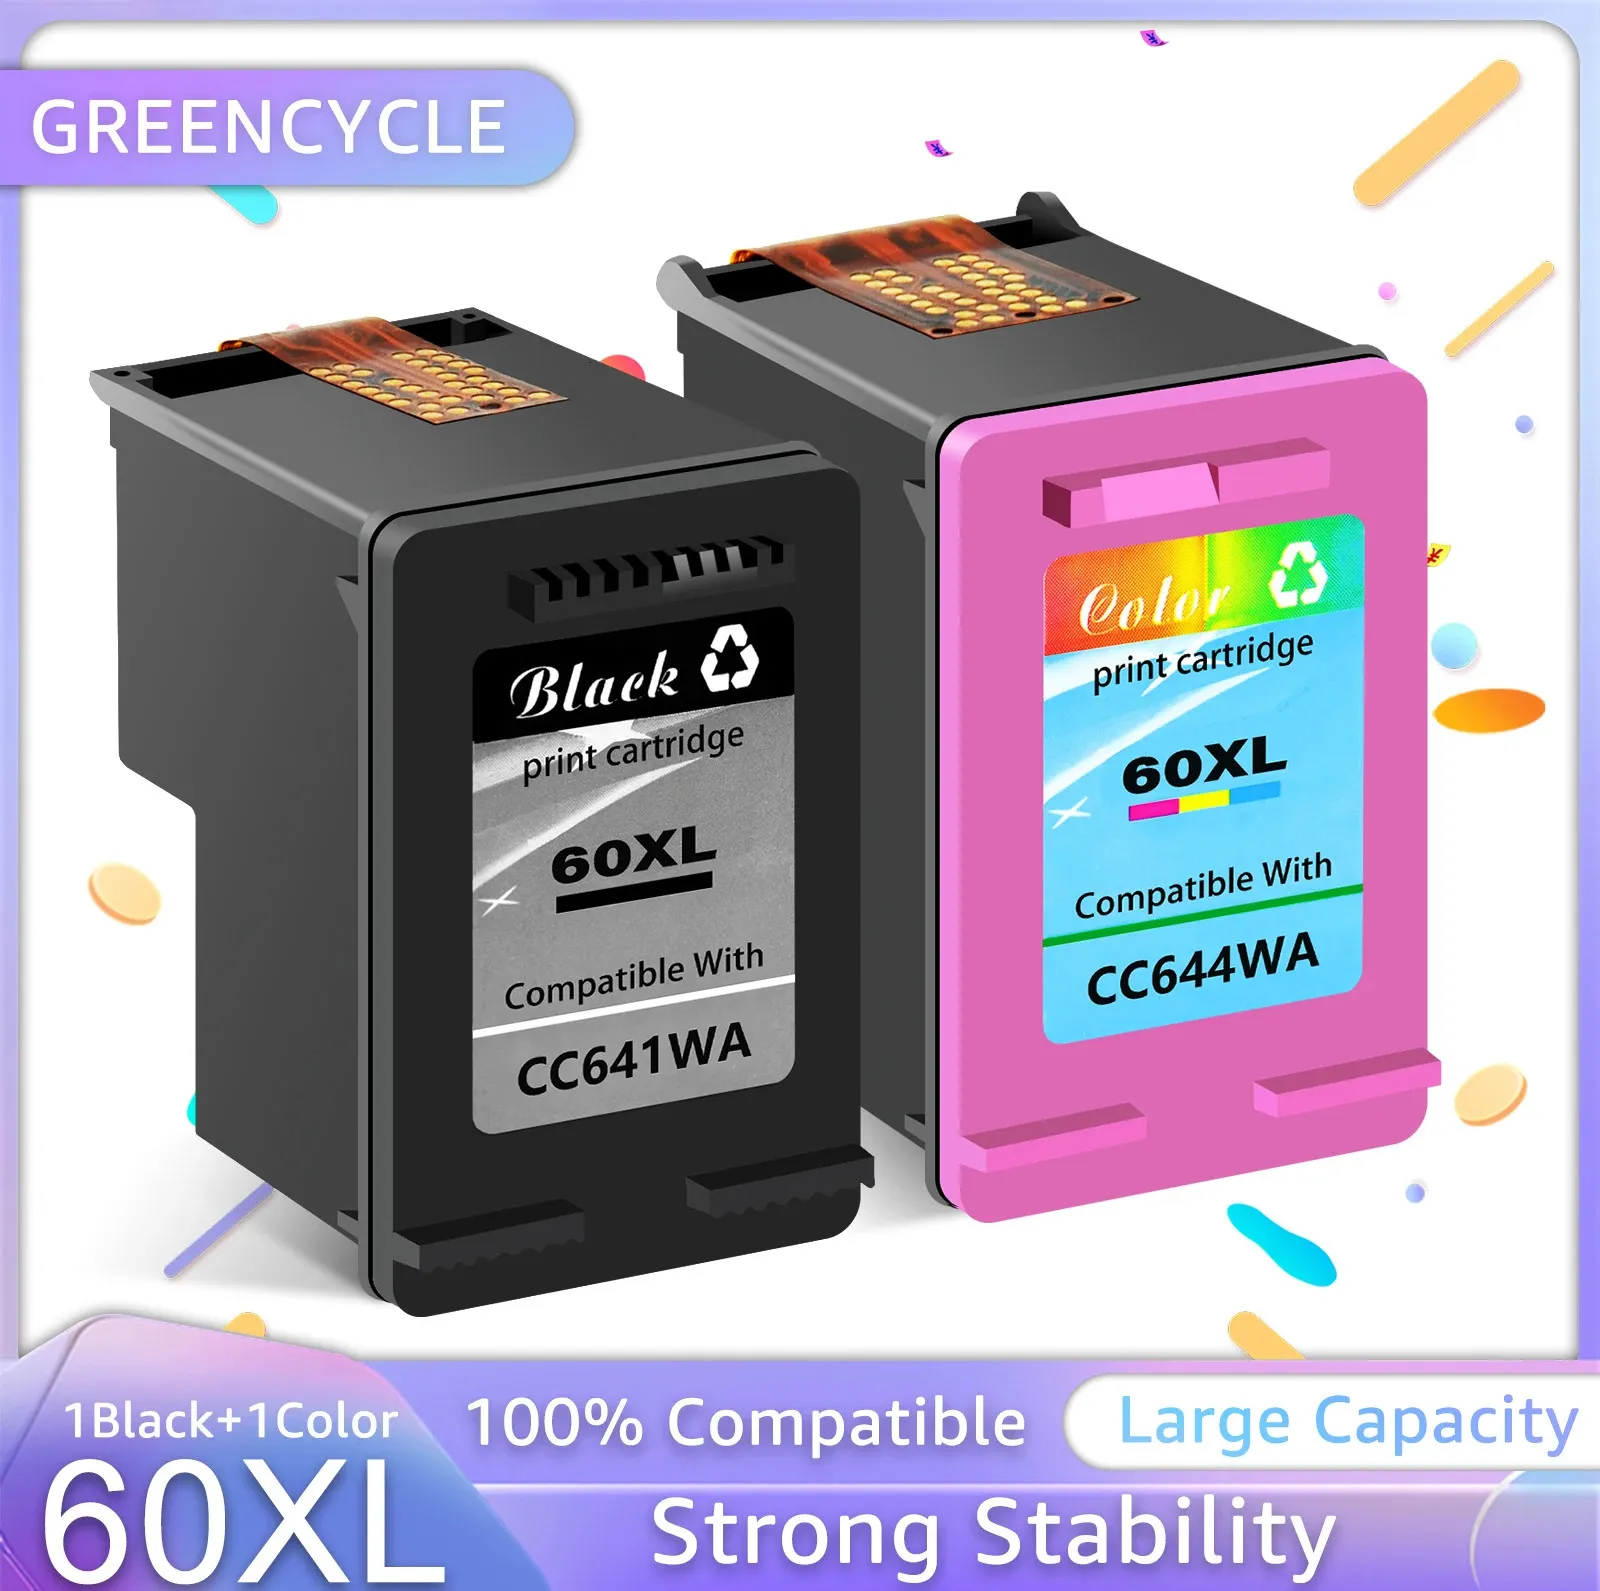 Toner Cartridges Greencycle Compatible for HP 60 XL Black/Color Ink Cartridge for HP 60 60xl Deskjet F2480 F4280 D2530 PoSmart C4680 C4783 231116